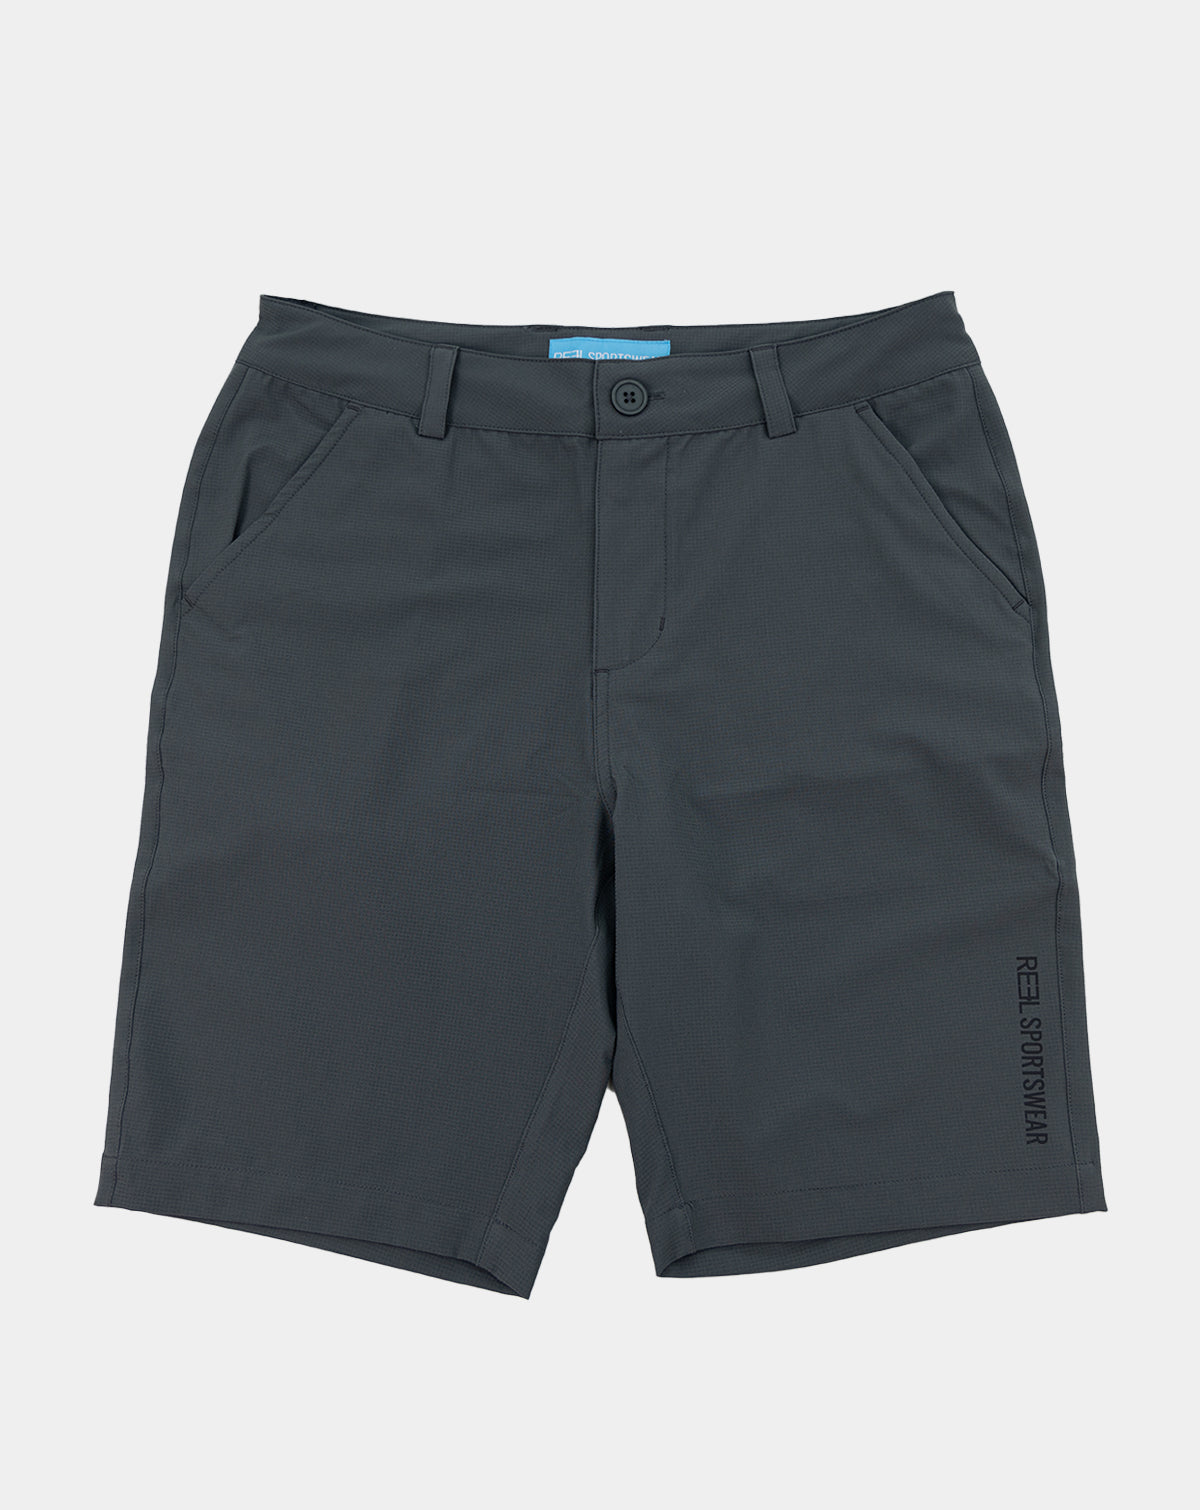 Tidal+ fishing Shorts - Reel Sportswear performance bottoms - Charcoal